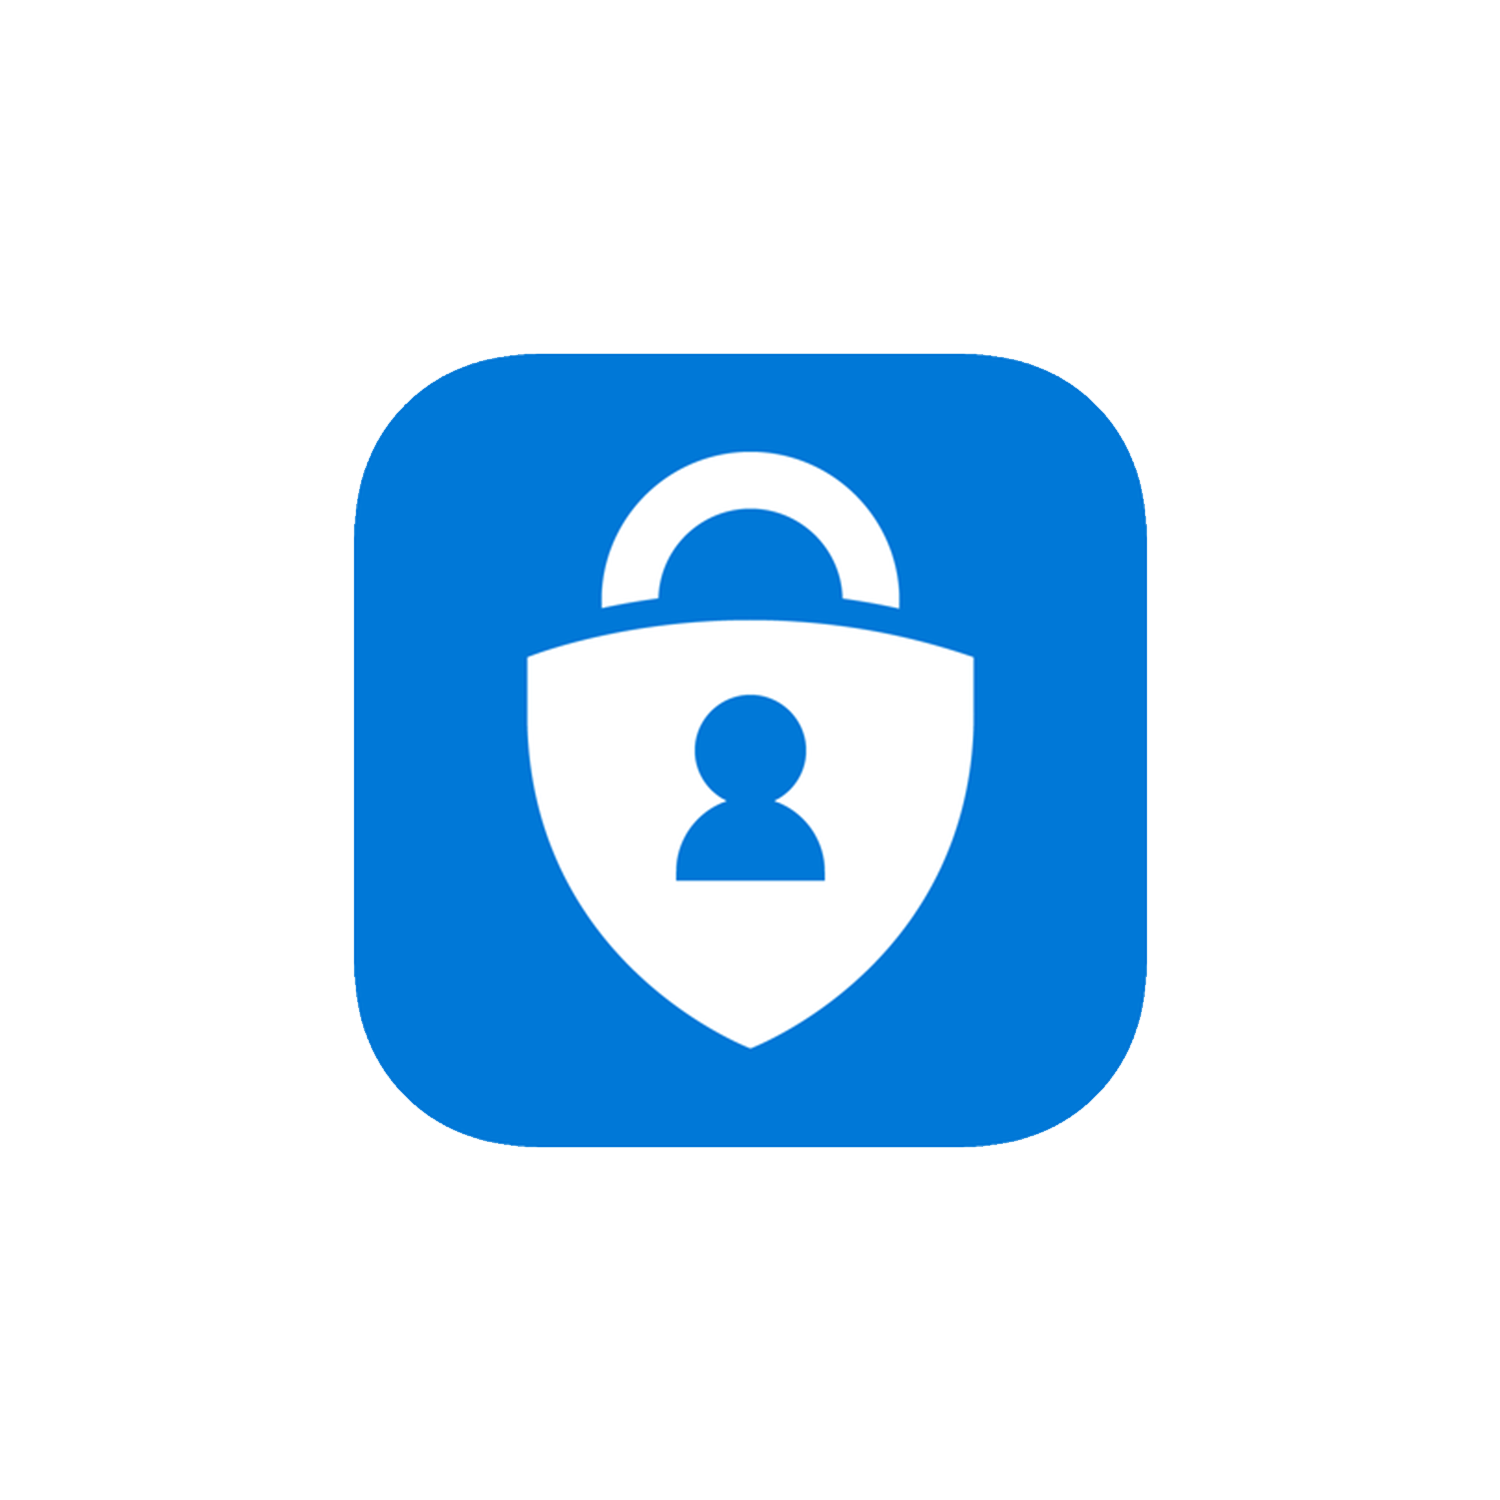 Microsoft's blues shield authenticator app logo.